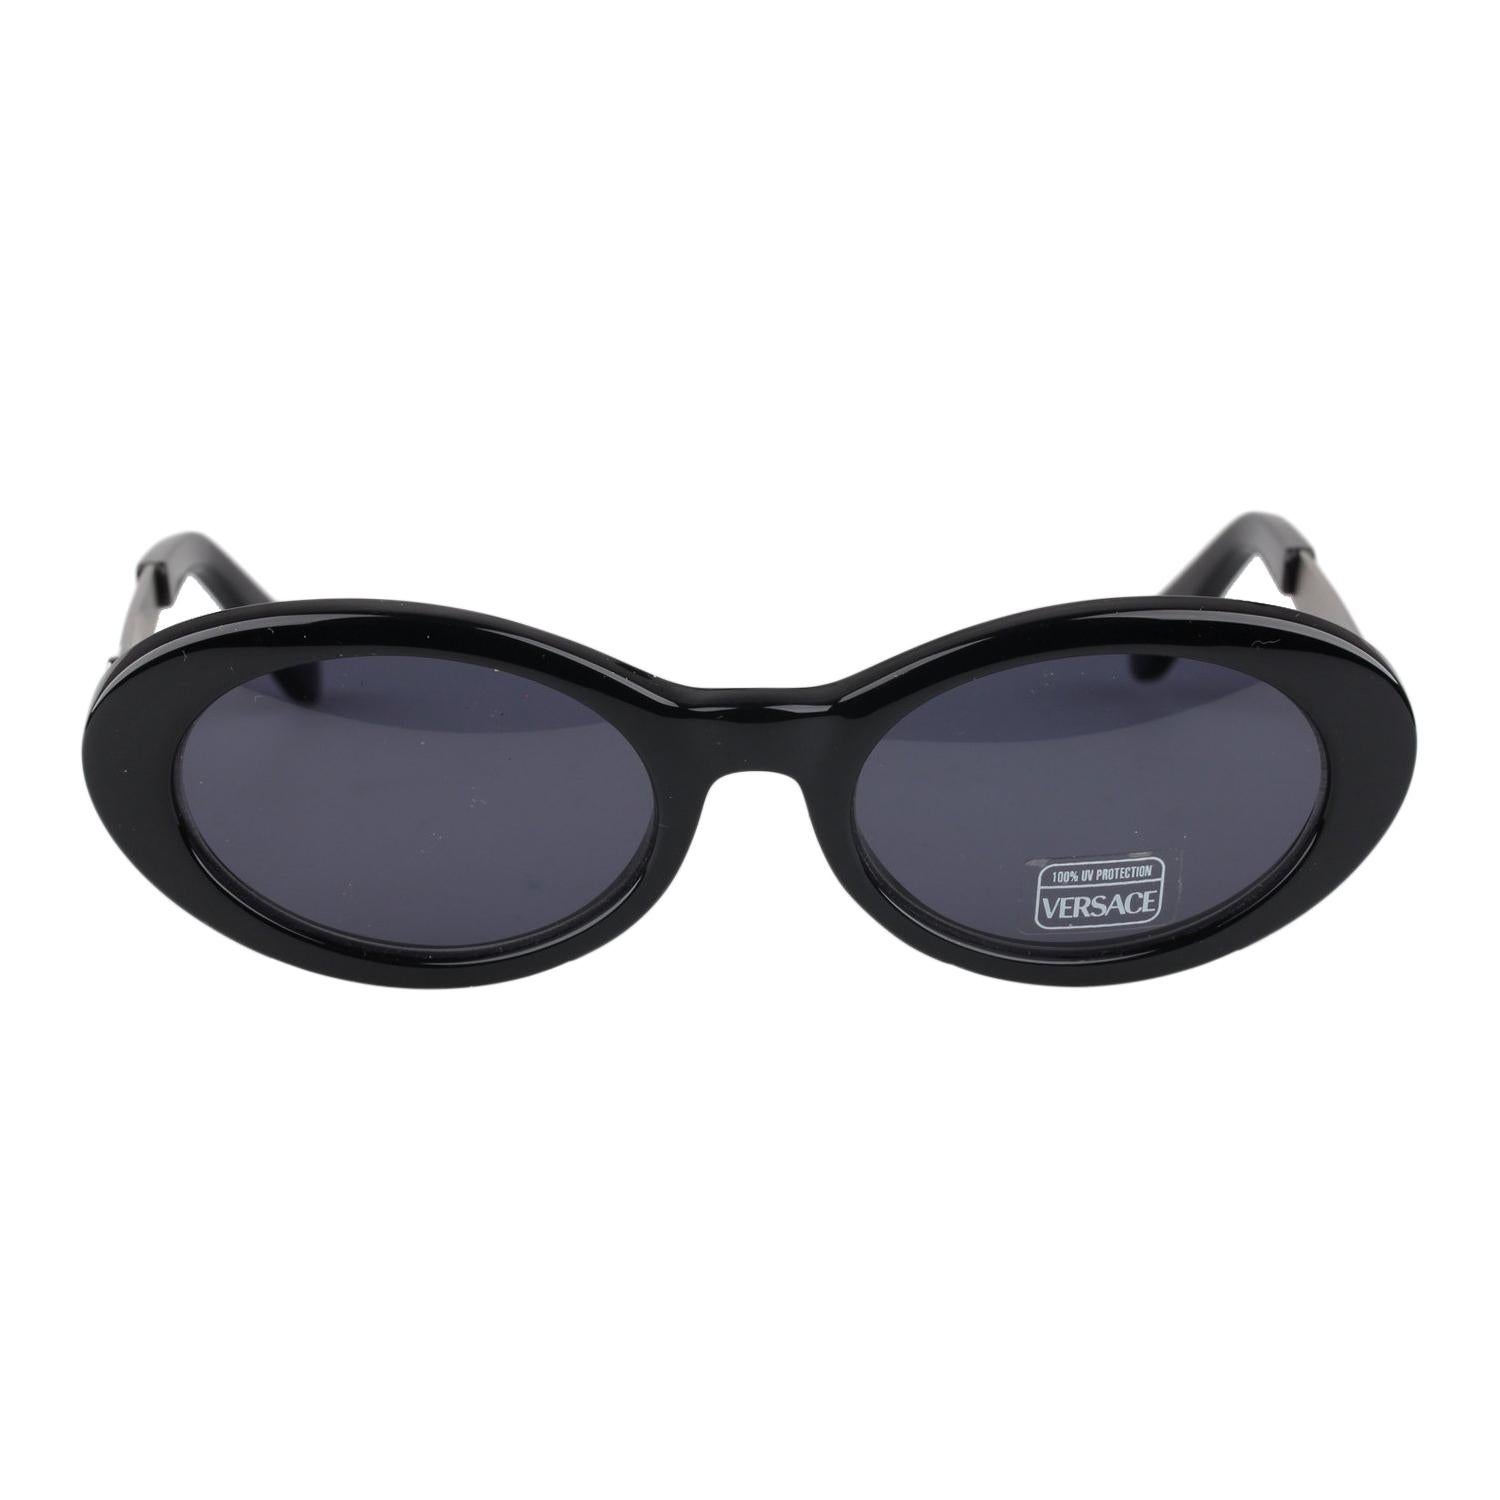 Gianni Versace Vintage Black Sunglasses Mod. 451G Col 852 New Old Stock ...